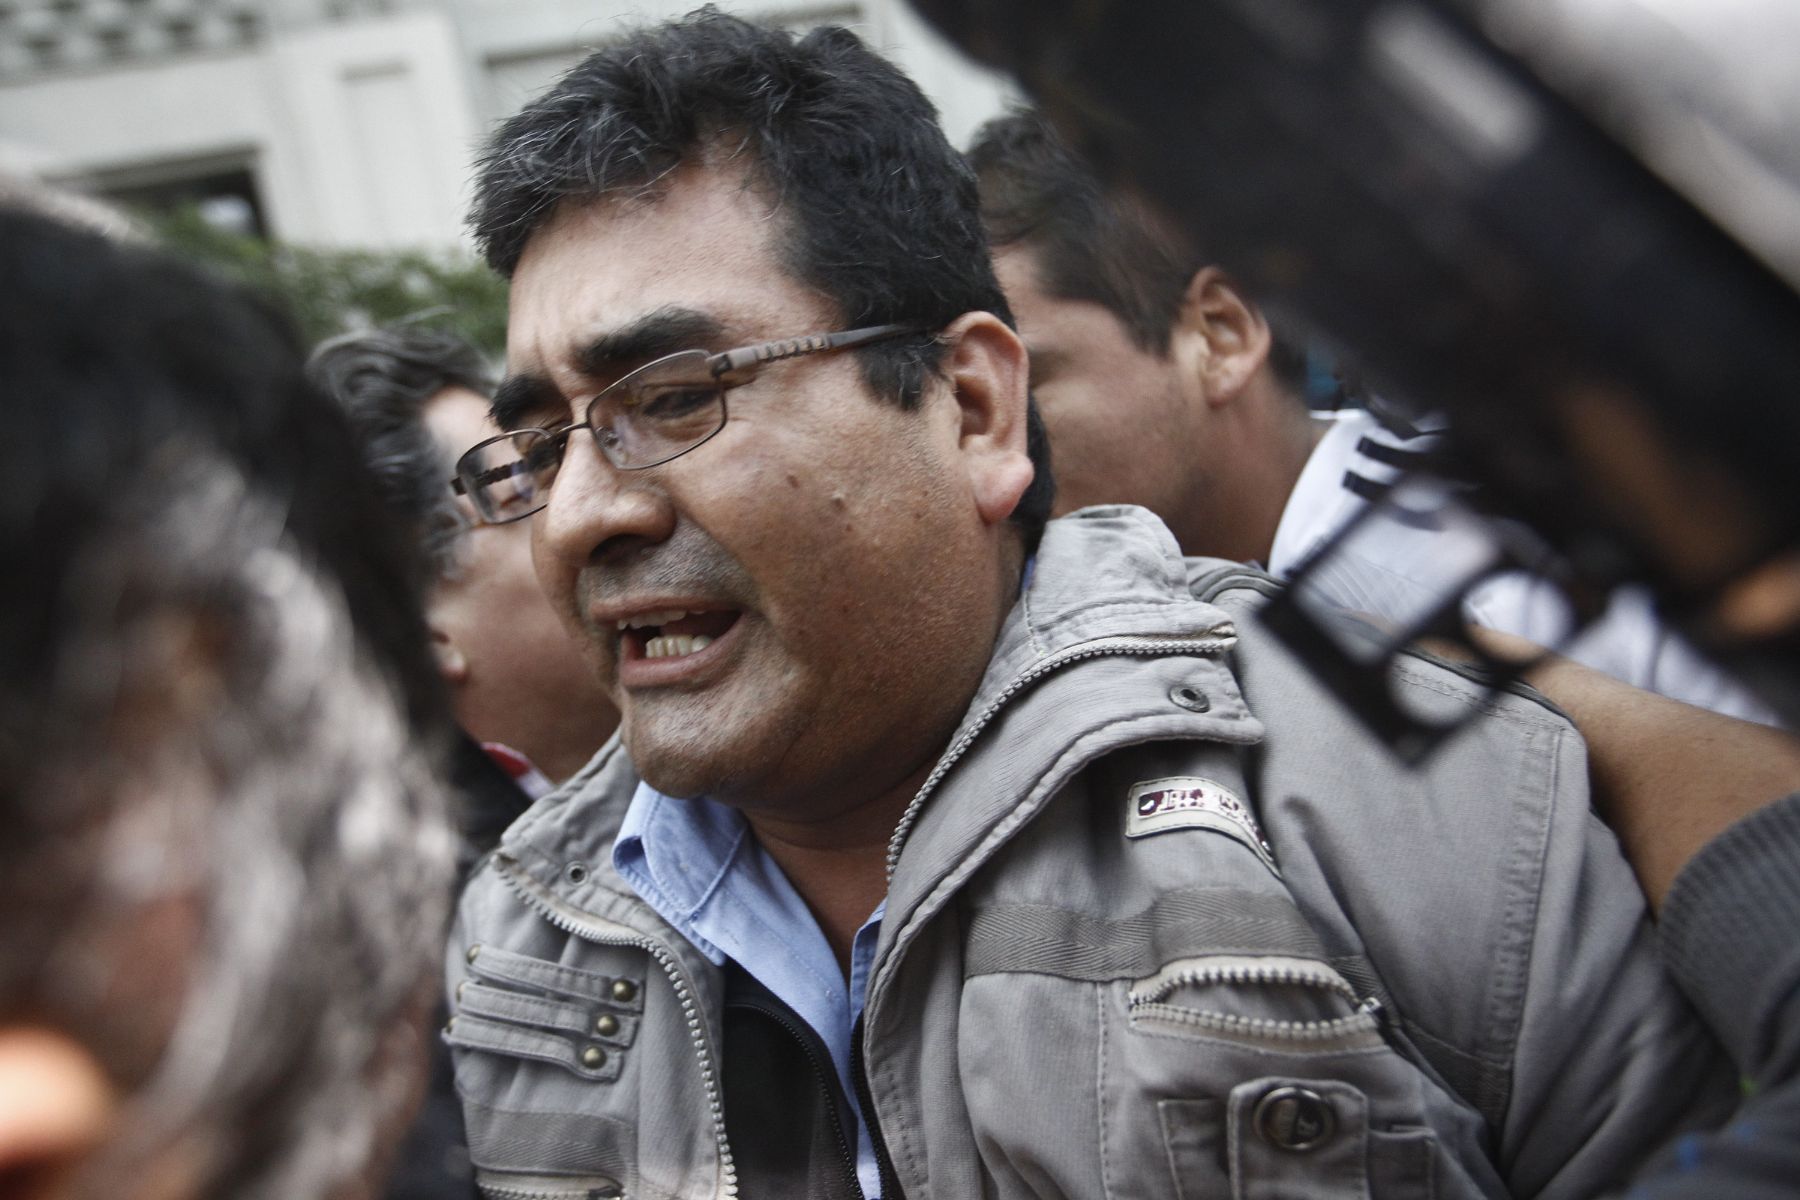 César Álvarez denunciado por homicidio calificado en caso Nolasco